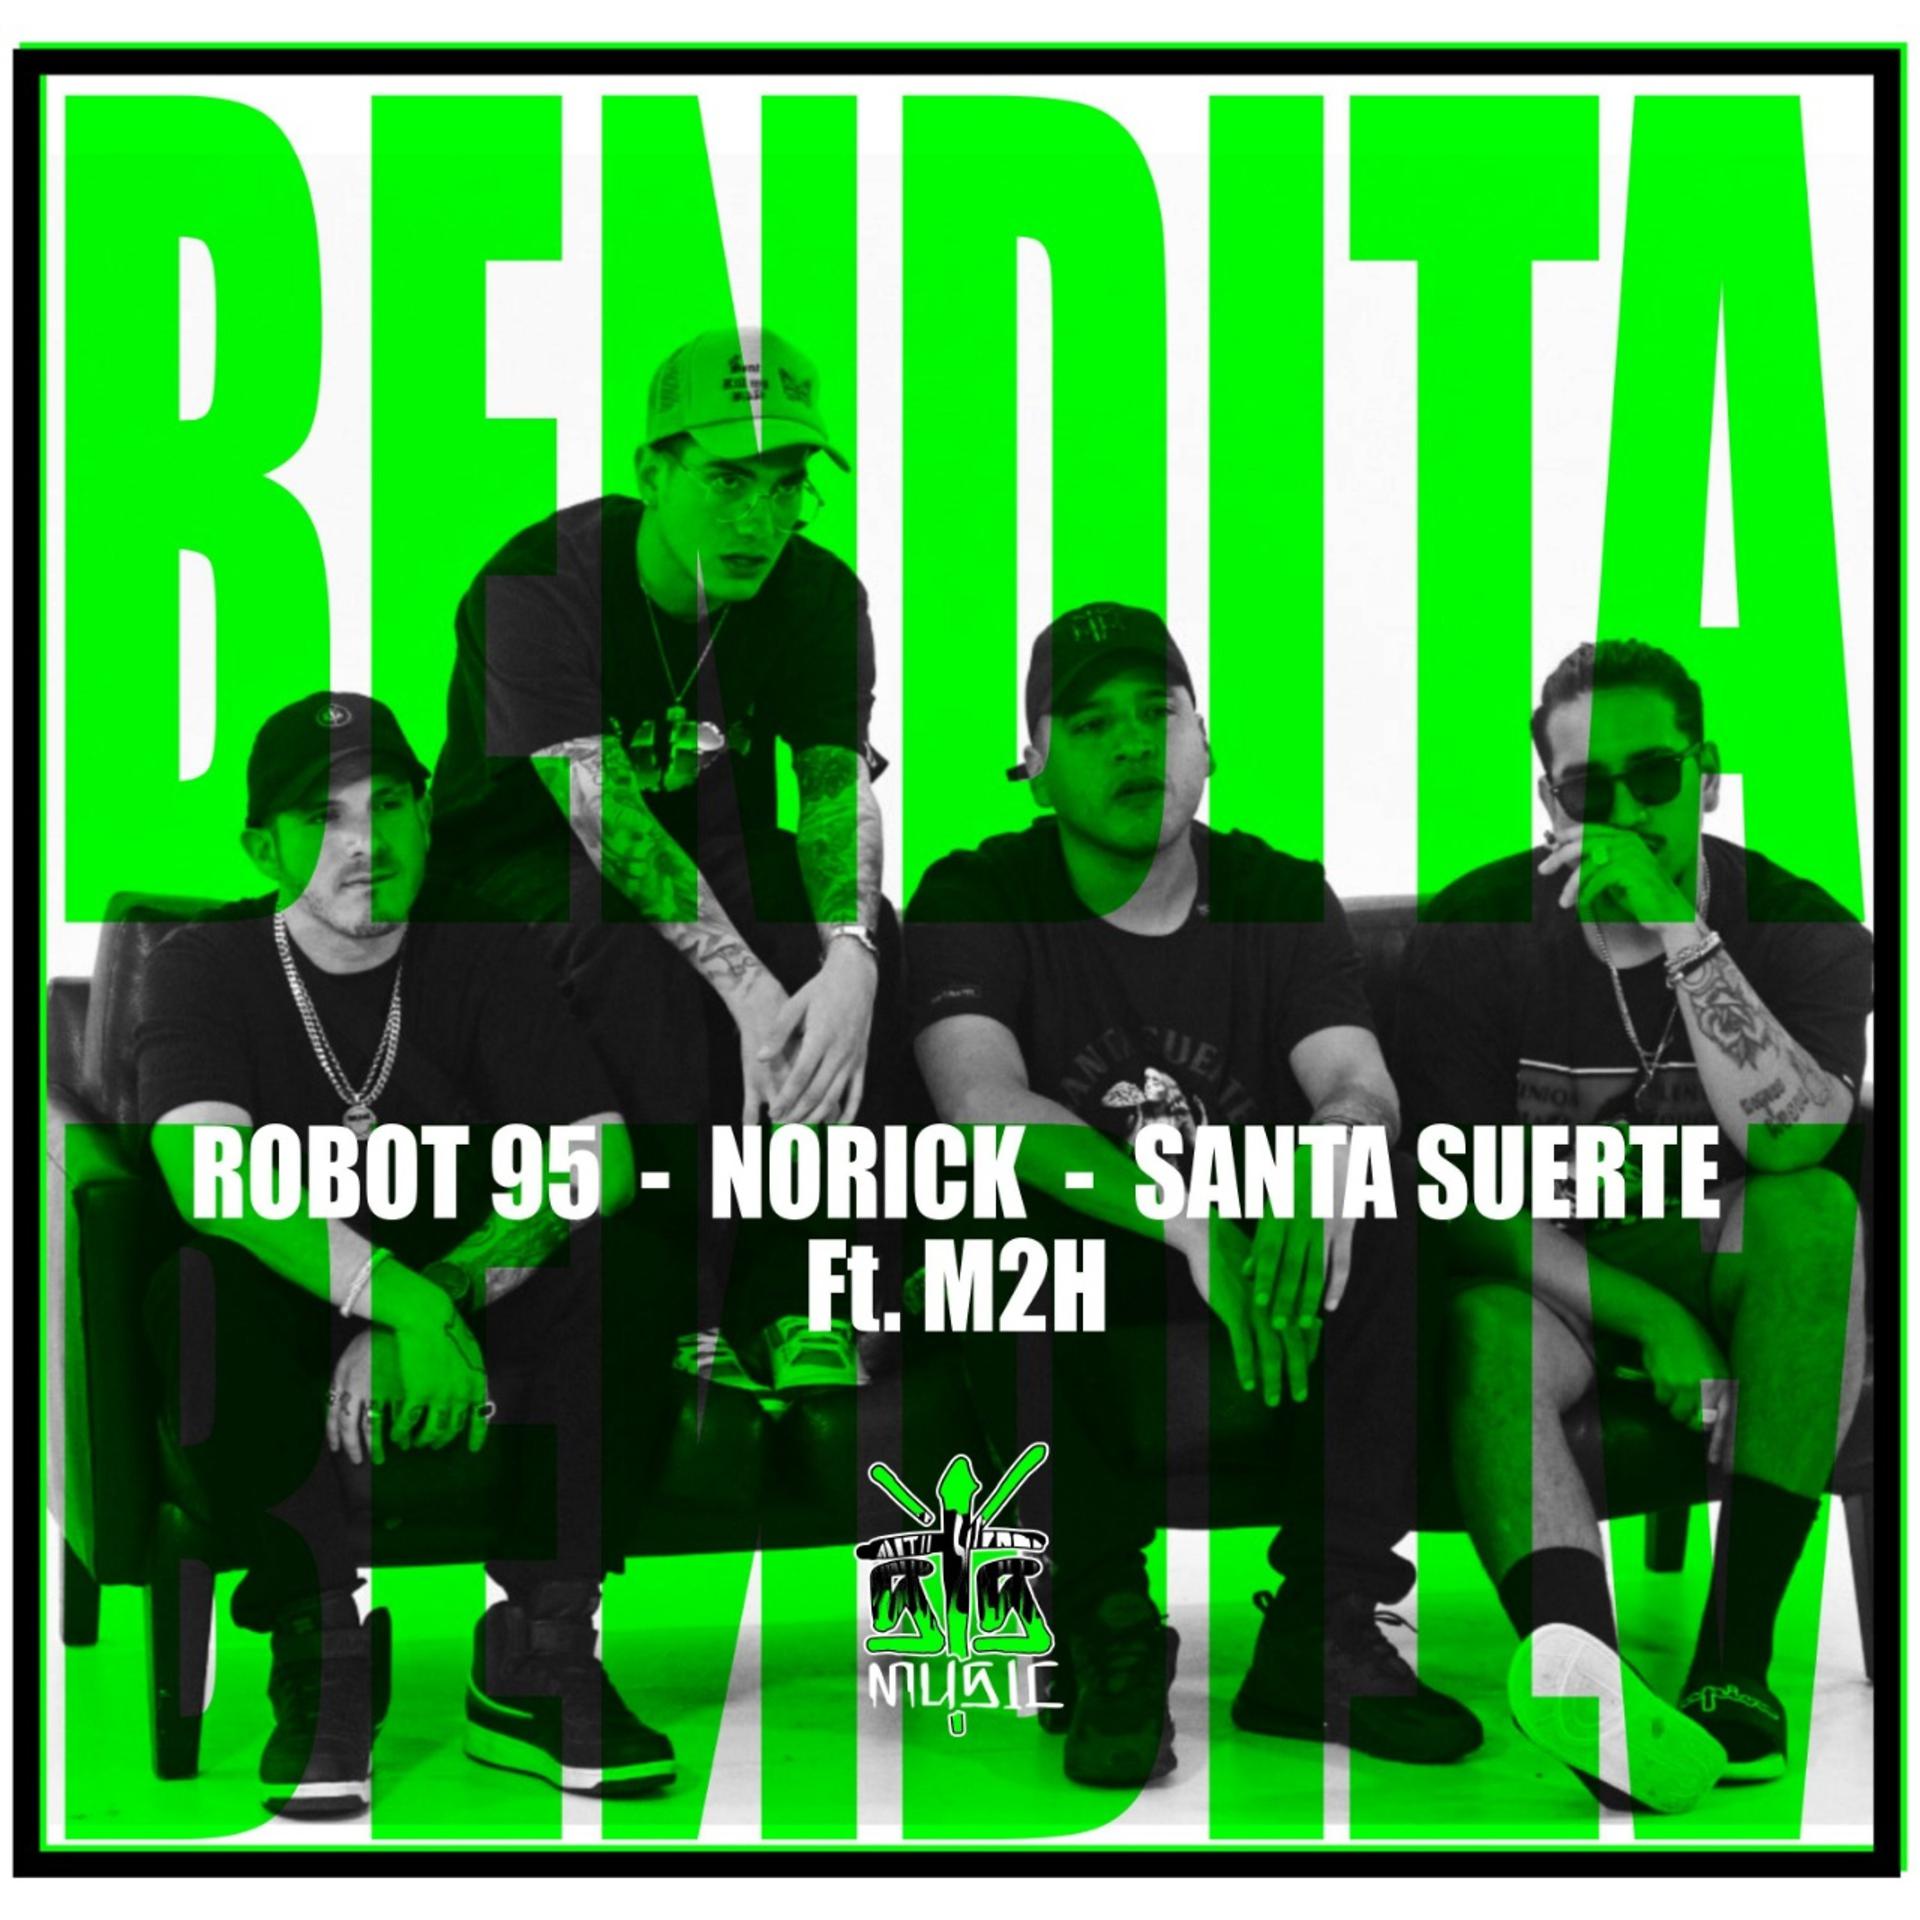 Постер альбома Bendita